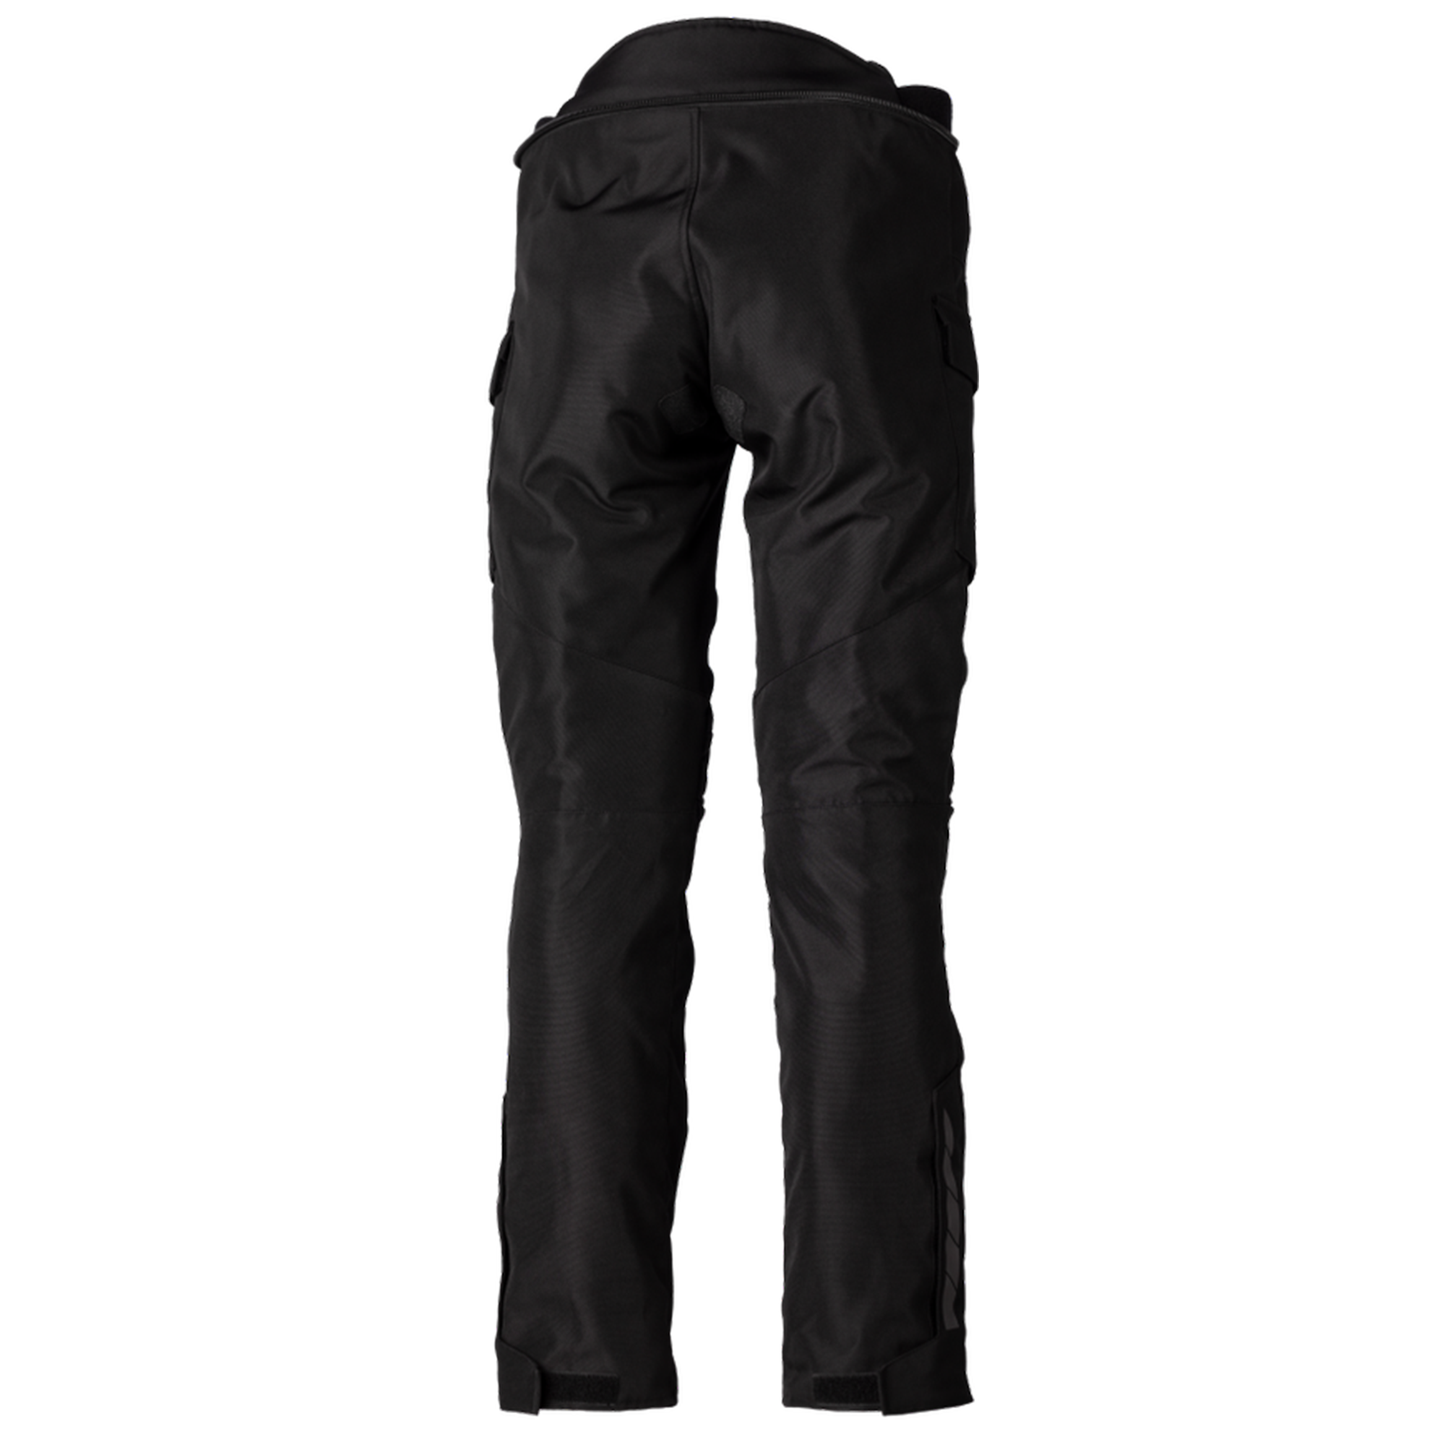 RST Alpha 5 Men's Textile Riding Jean - Long Leg - Black (3121)